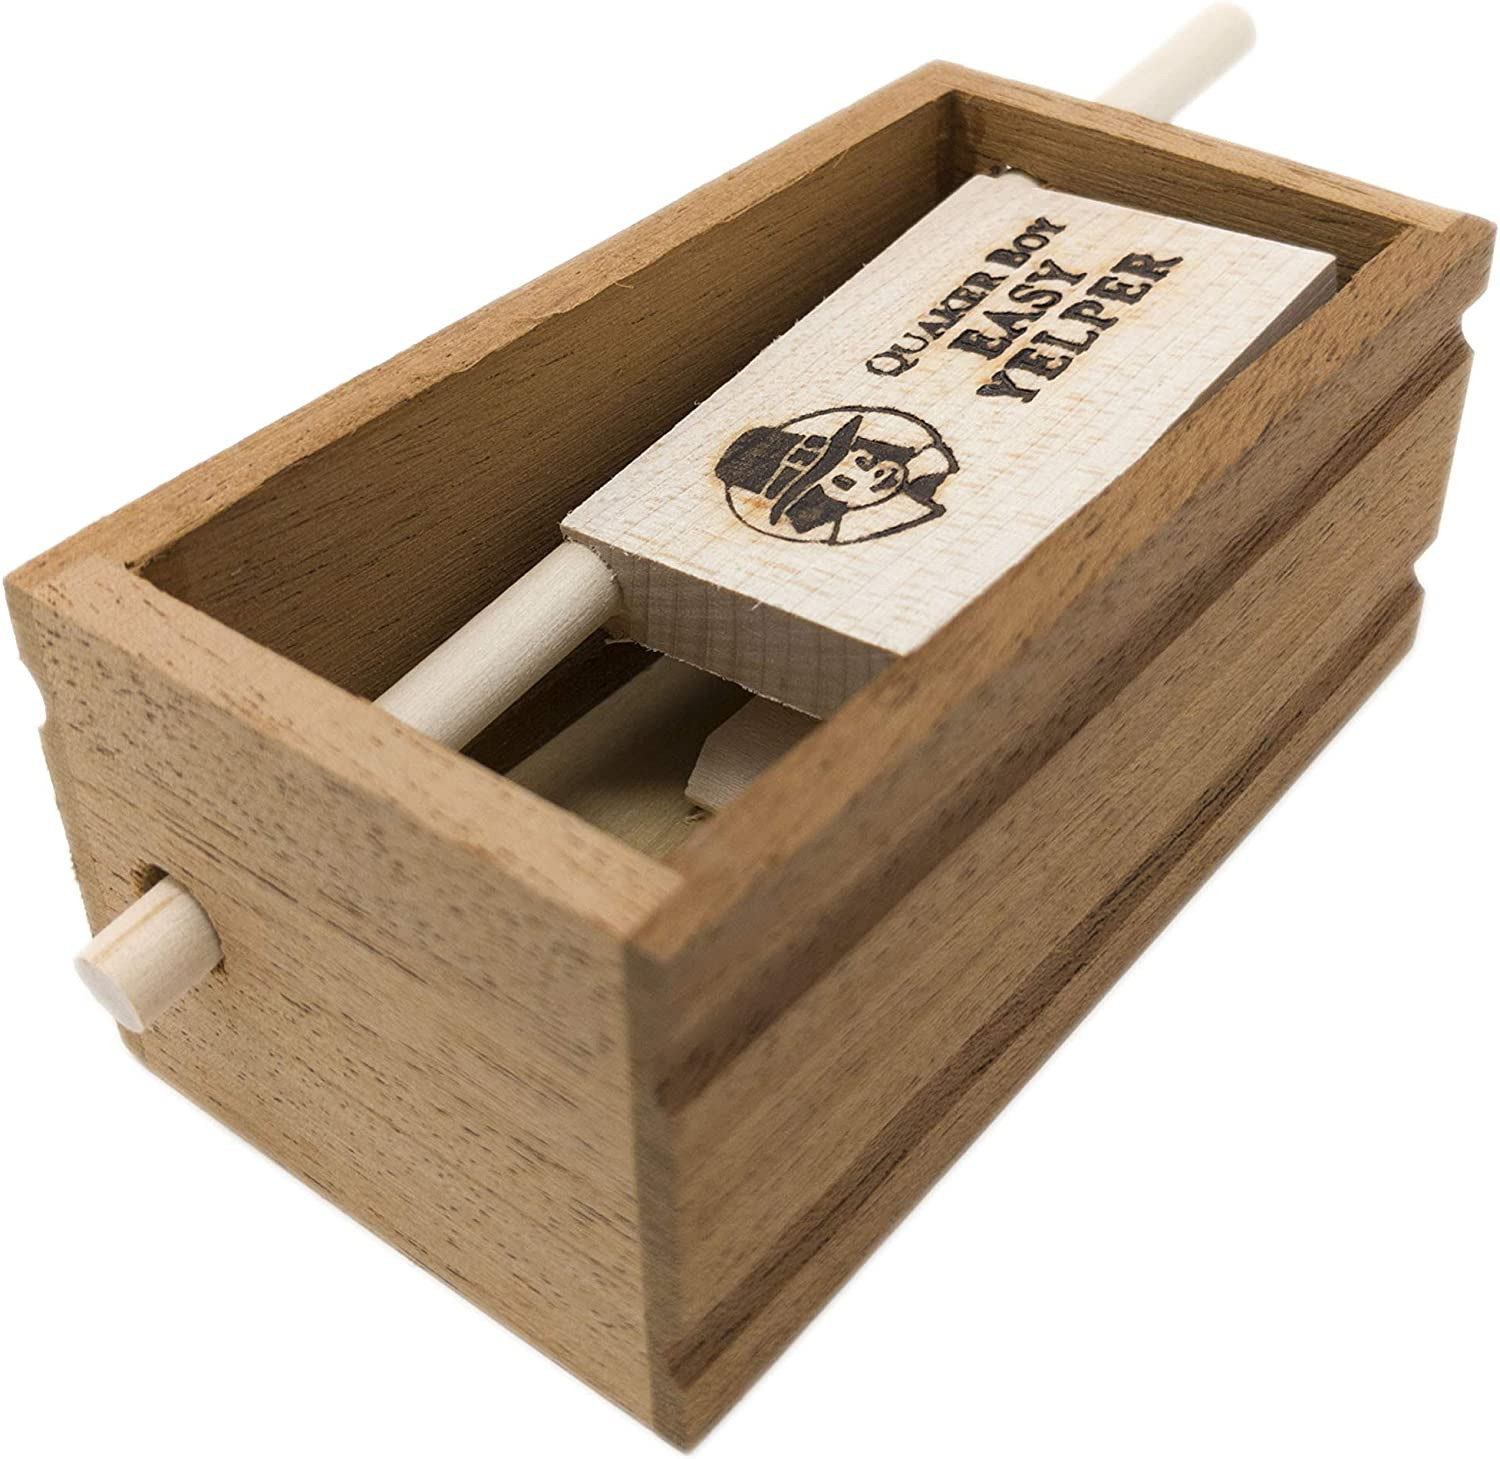 Quaker Boy - Easy Yelper Turkey Box Call, Wood